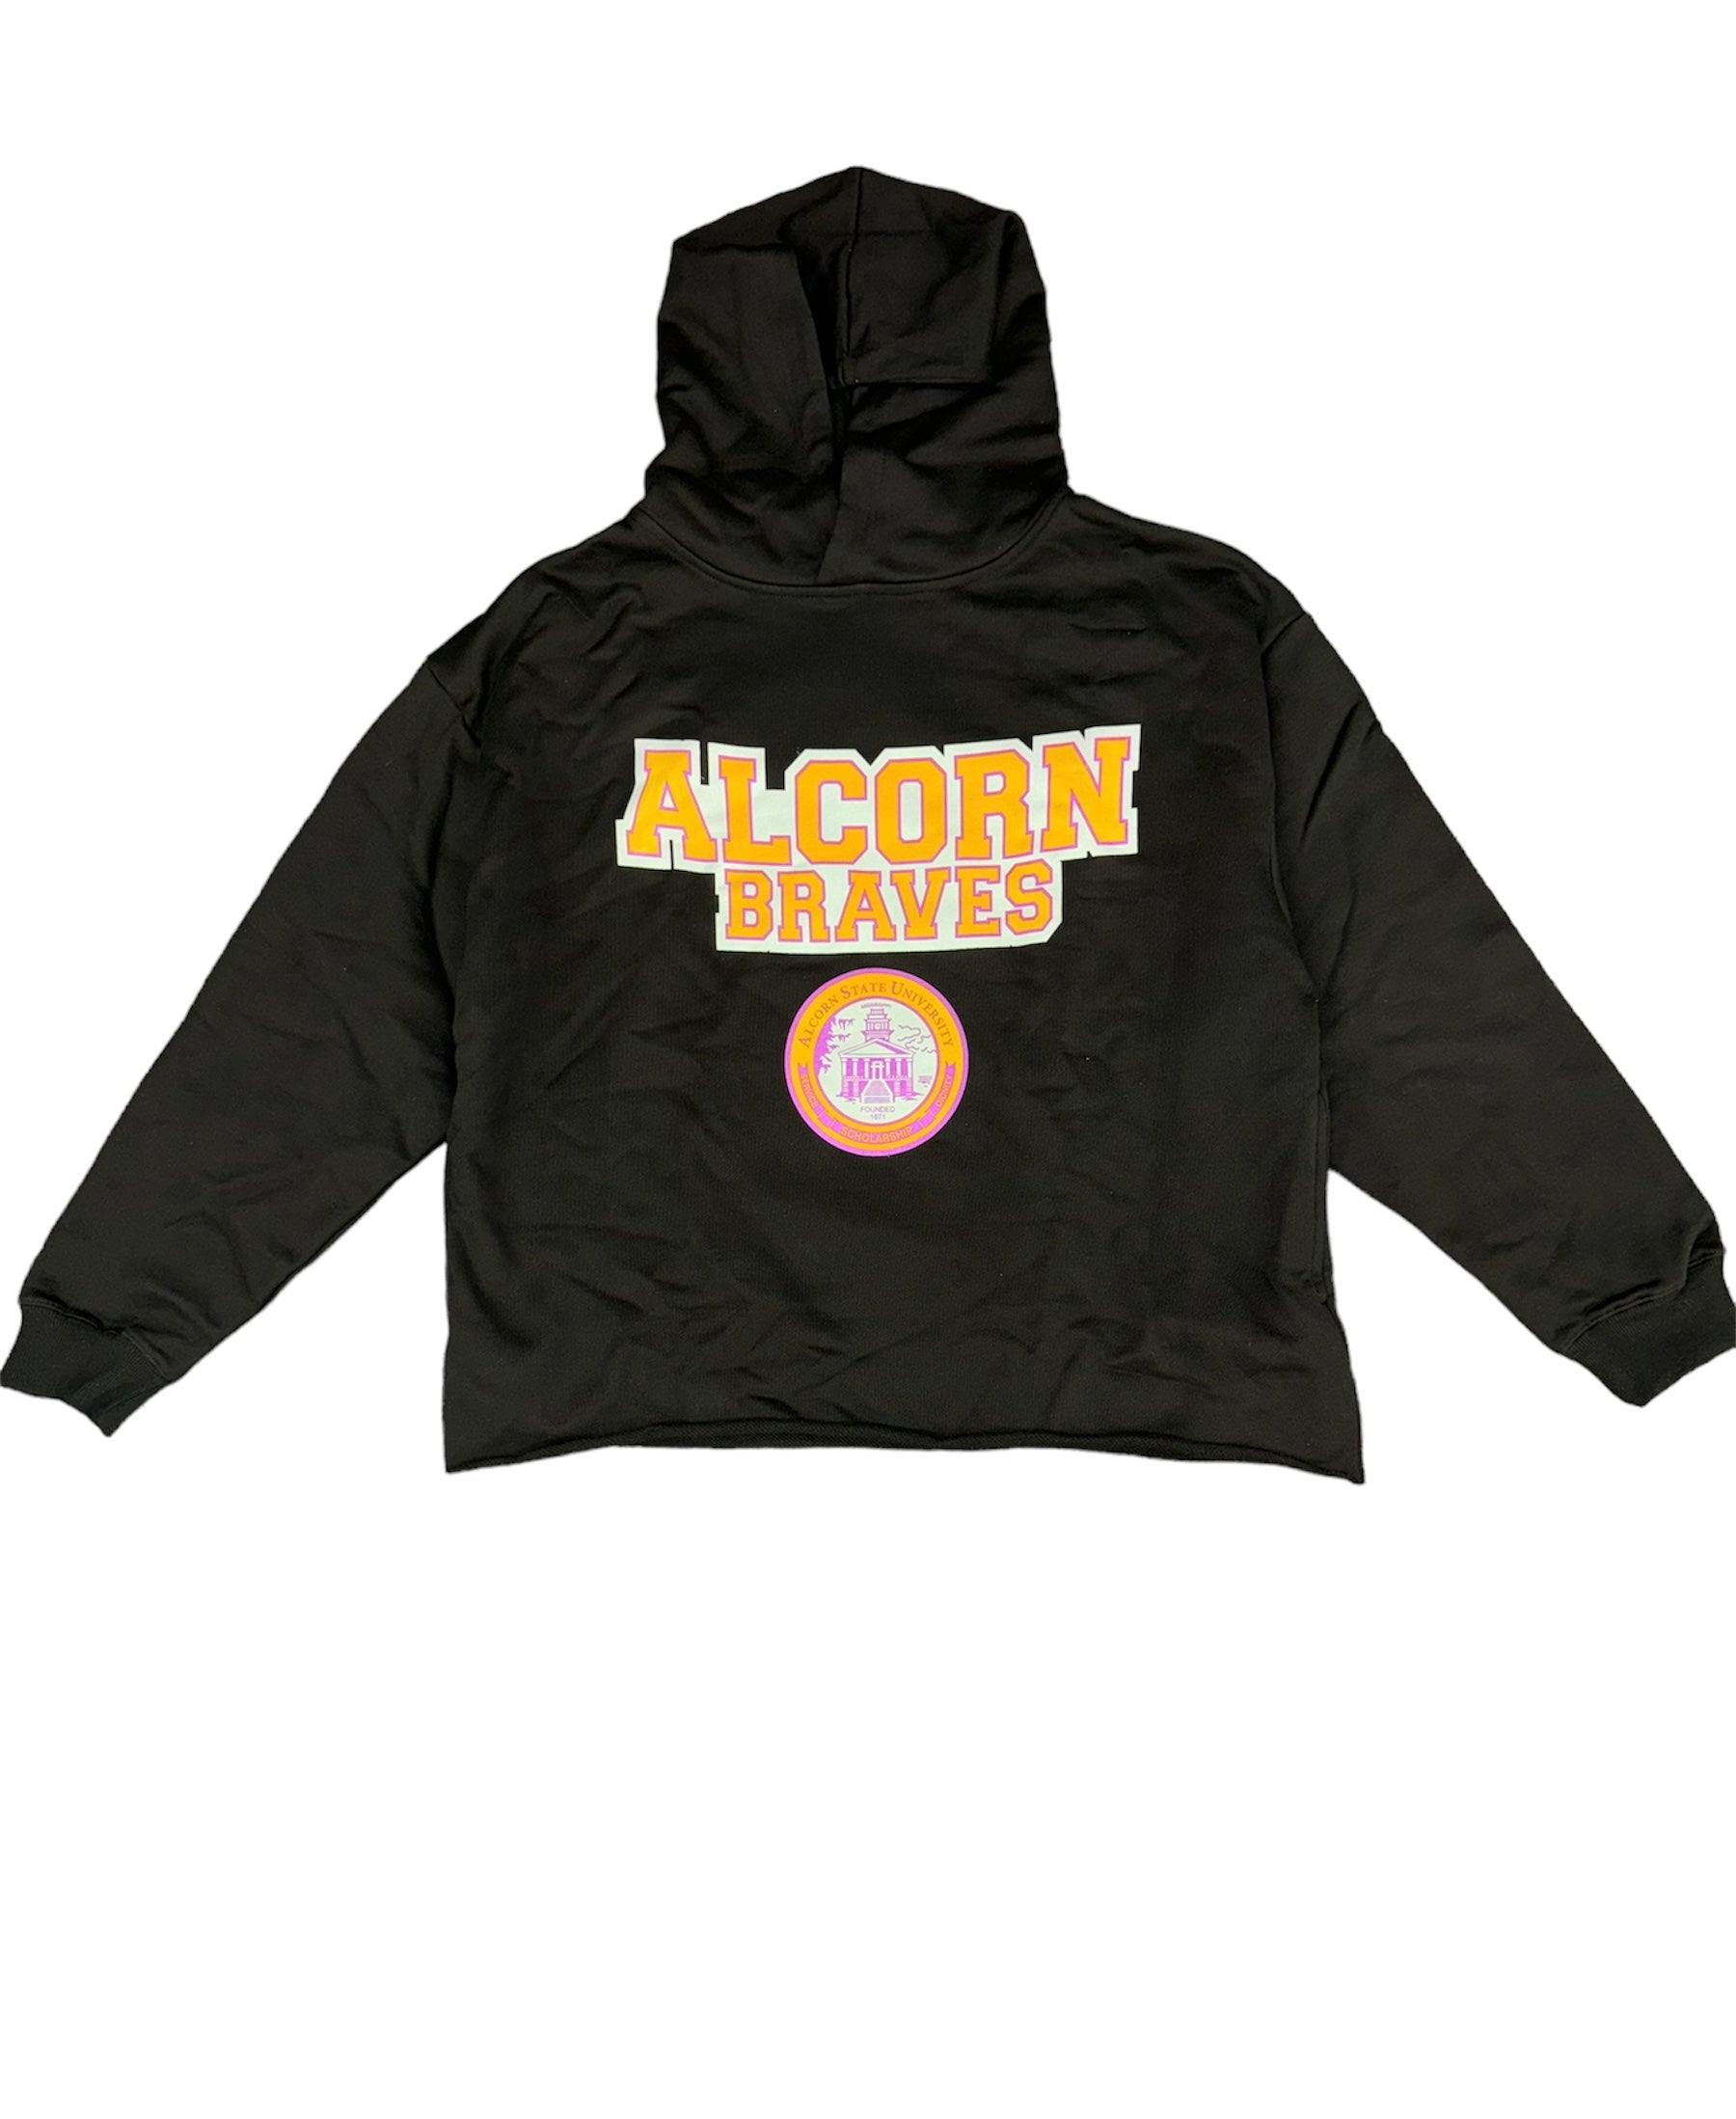 Alcorn STATE HOODIE  BLACK